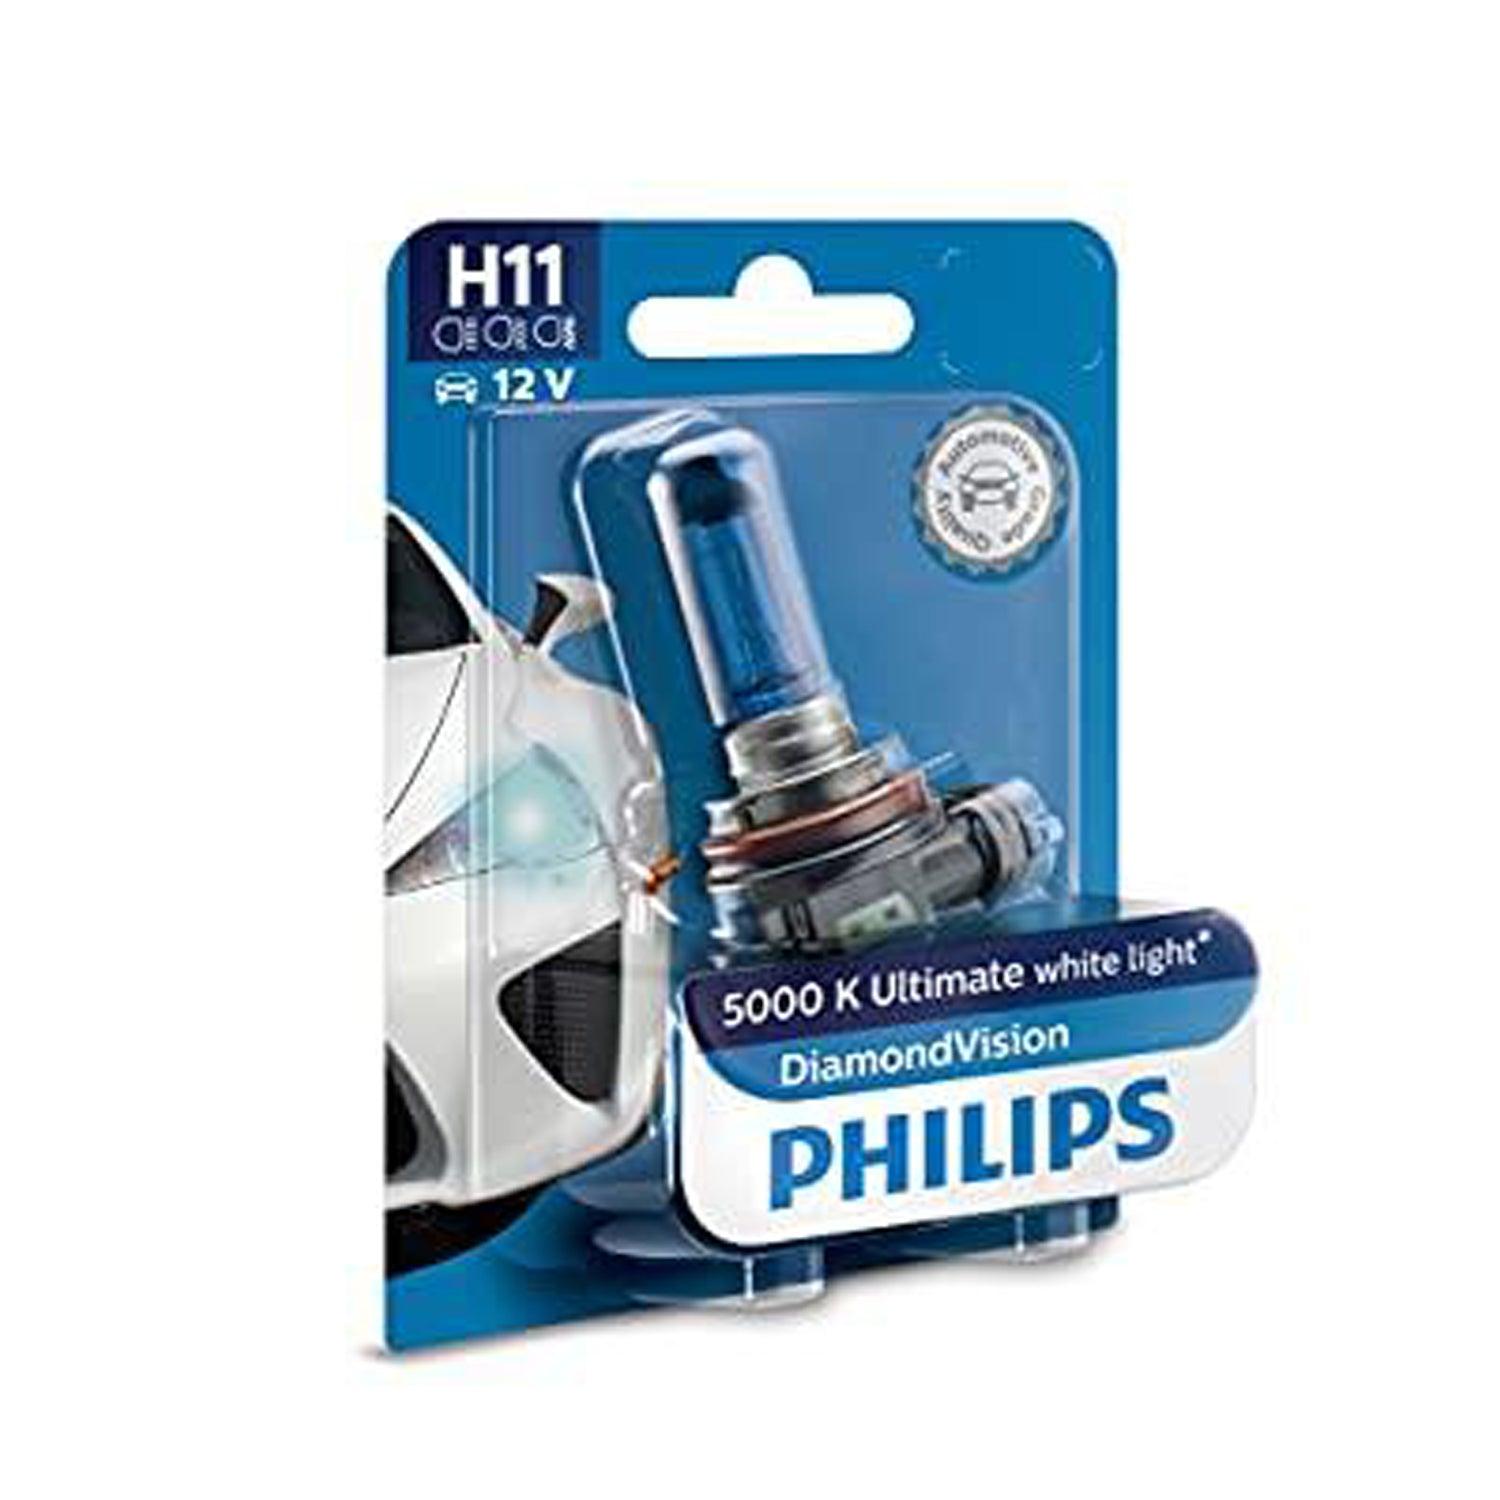 Philips 12342XVP H4 X-treme Vision Plus Car Headlight Bulb (12V, 60-55W)